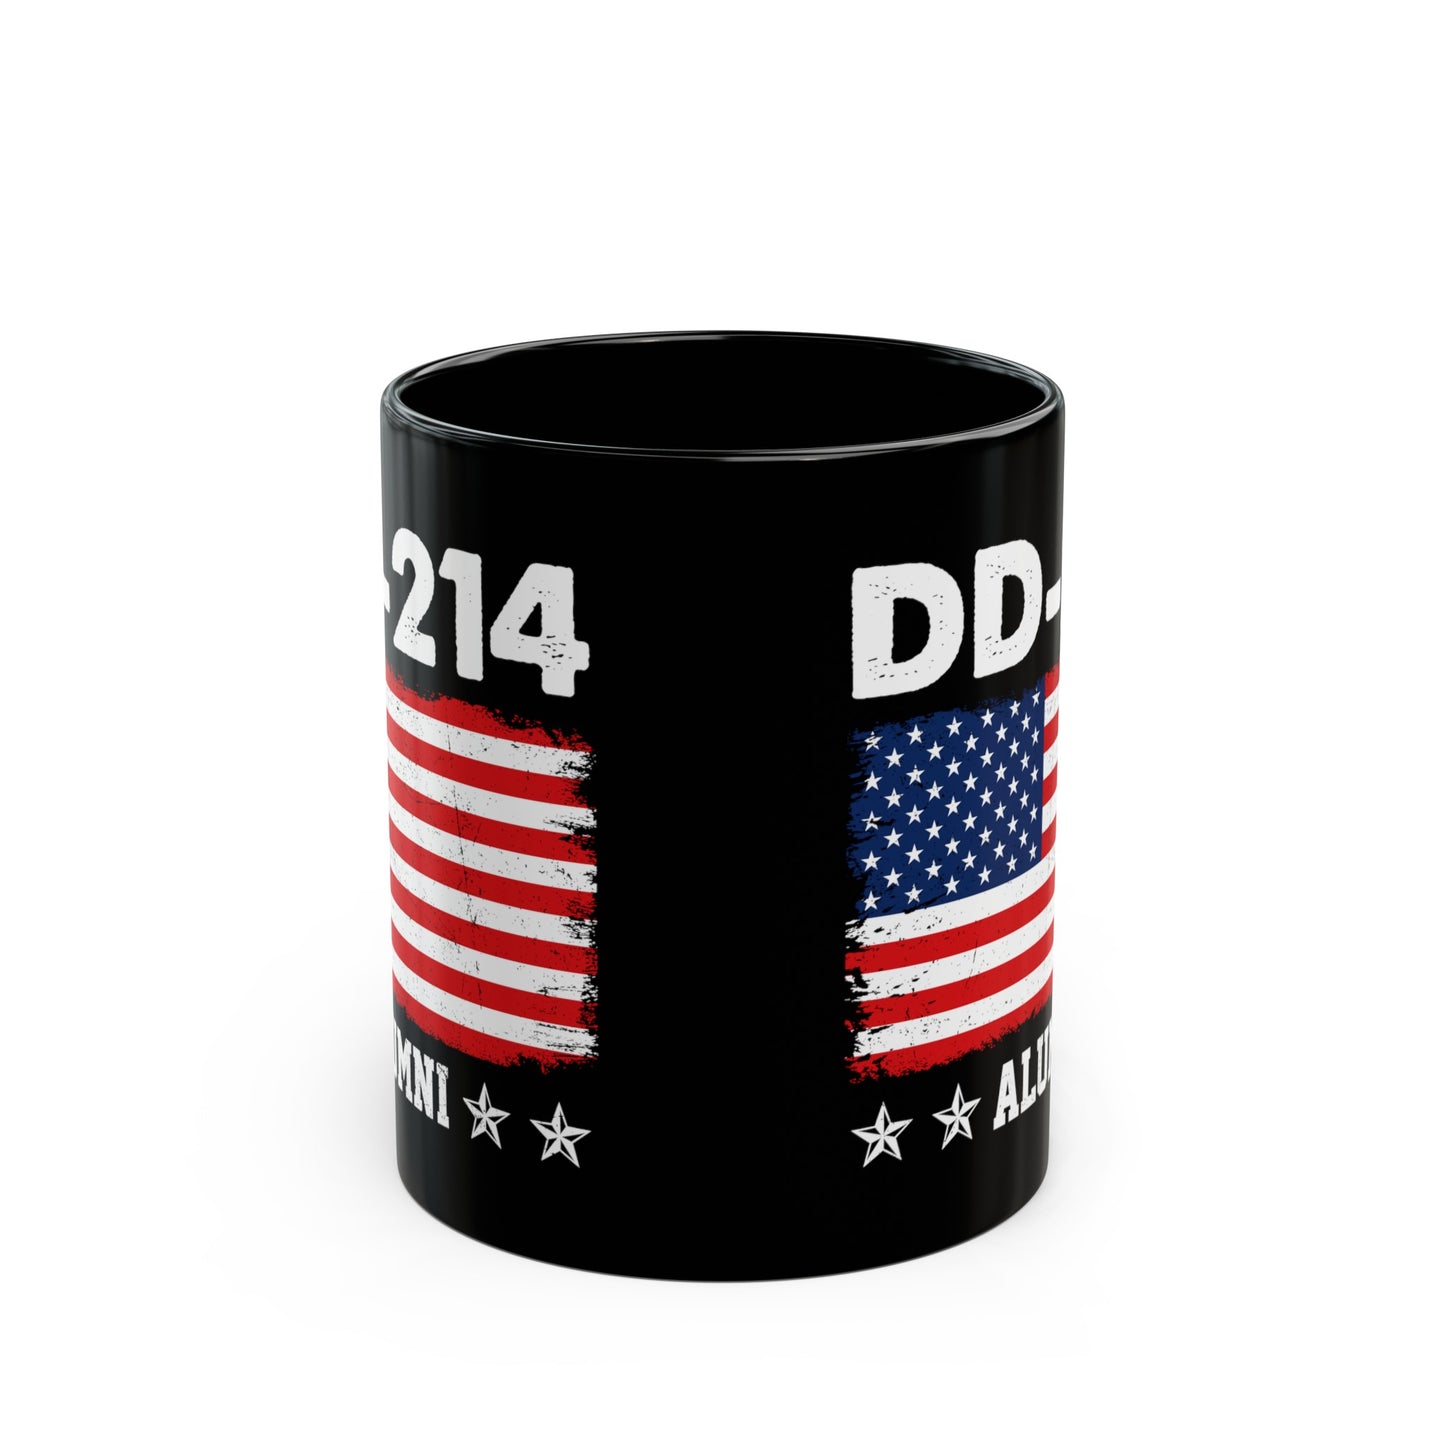 D-214 Alumni US Flag Mug - 11 oz